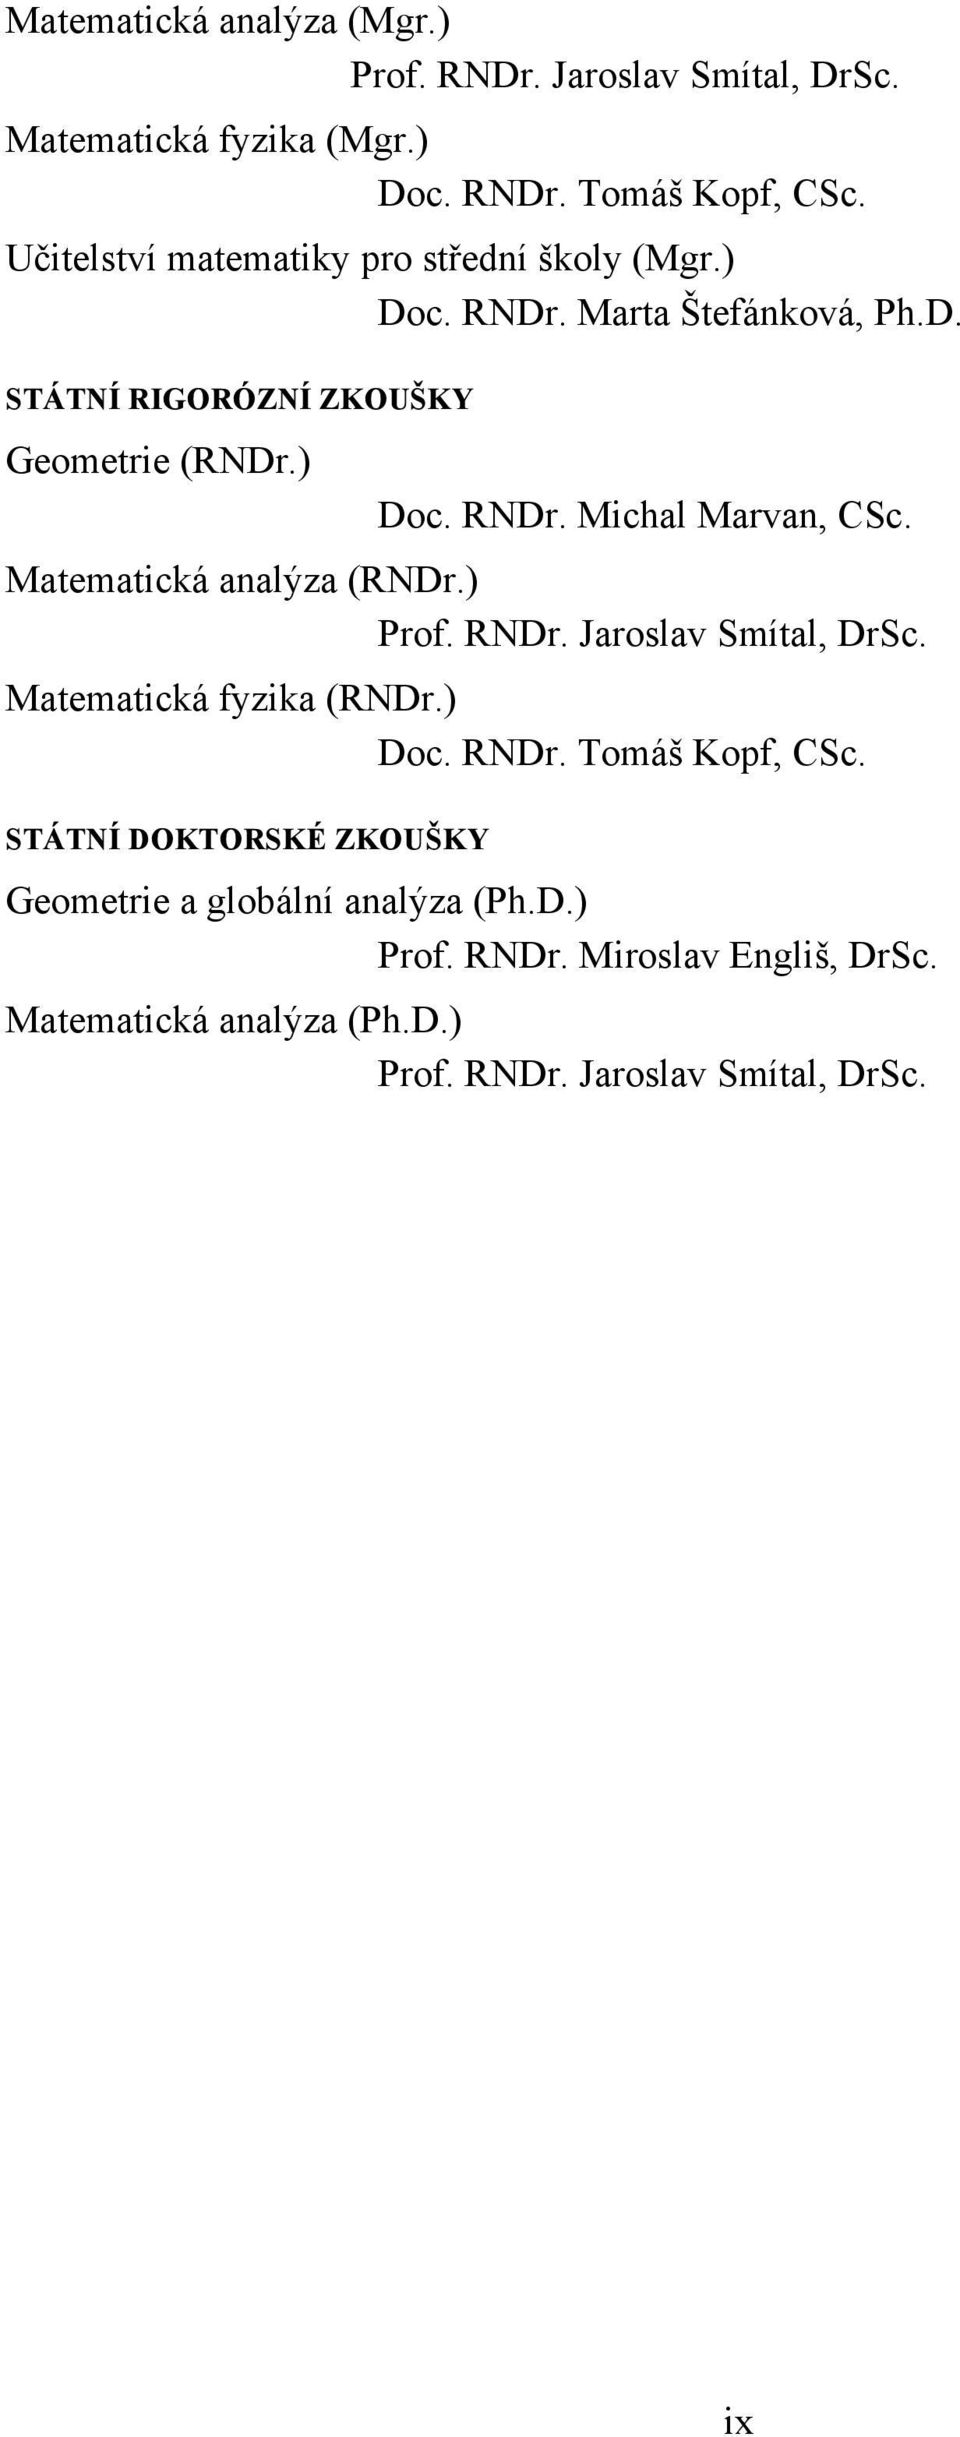 Matematická analýza (RNDr.) Prof. RNDr. Jaroslav Smítal, DrSc. Matematická fyzika (RNDr.) Doc. RNDr. Tomáš Kopf, CSc.